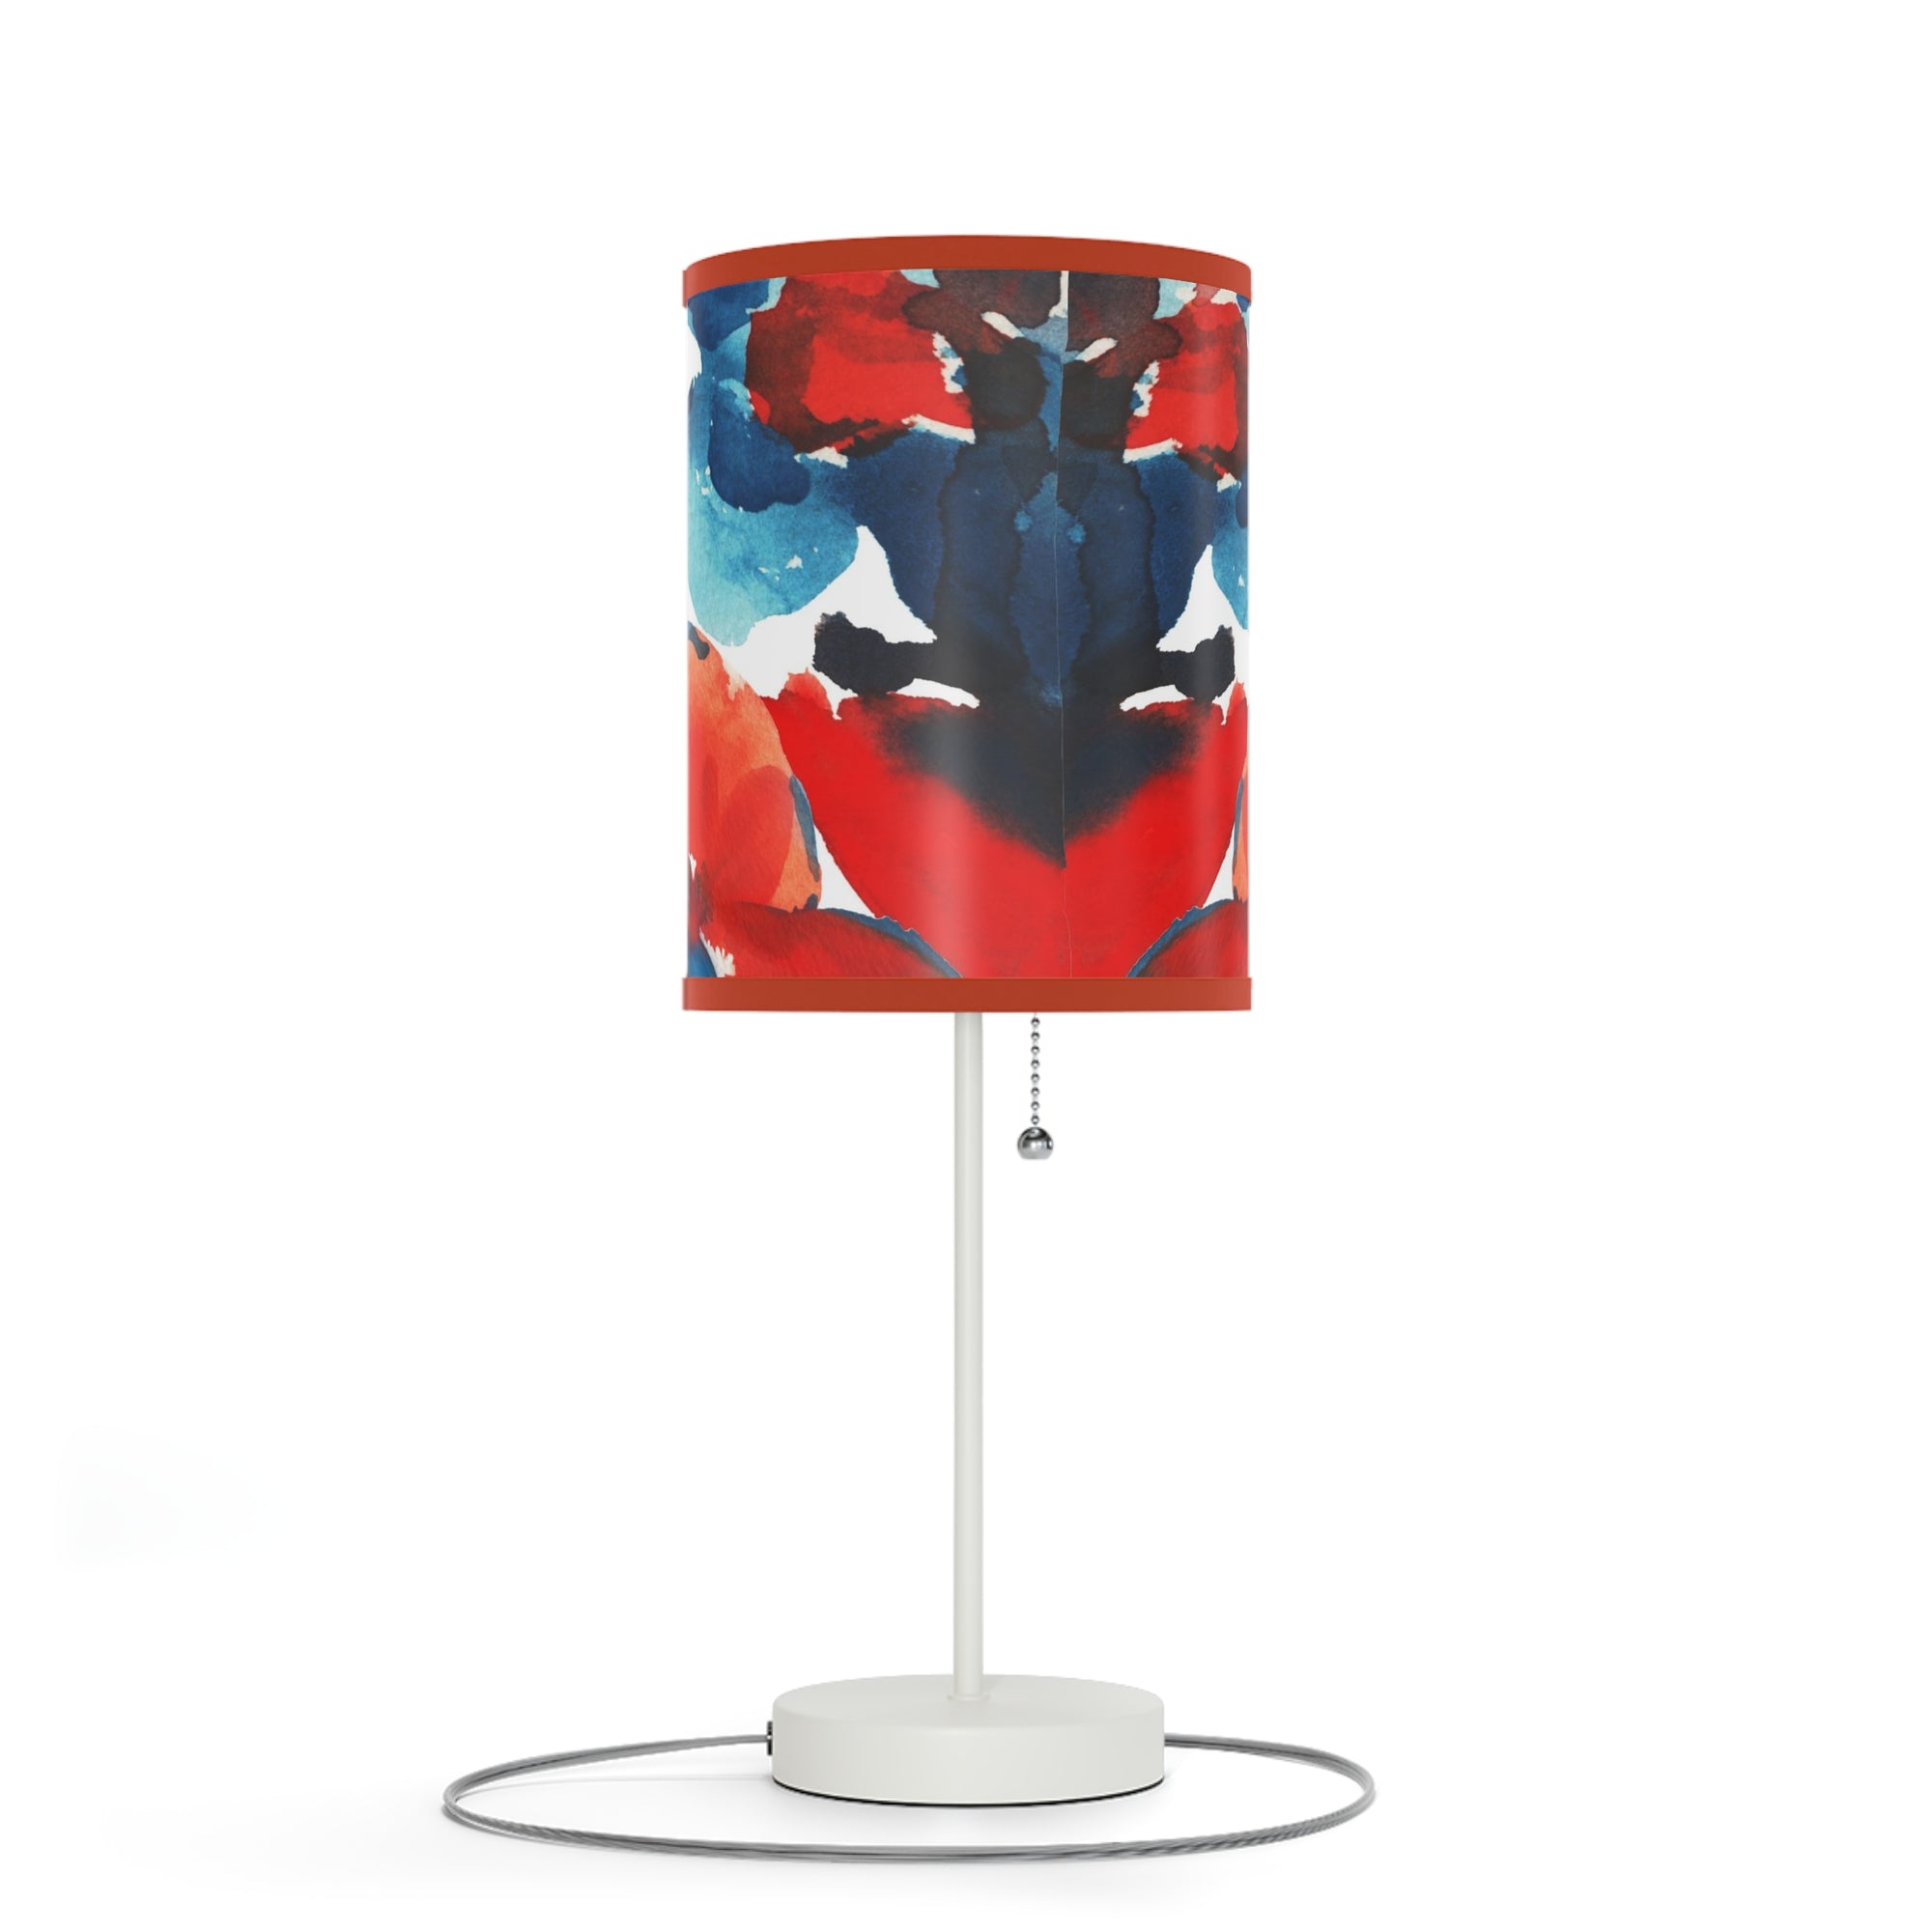 Patriotic Lamp | Red White Blue Desk Lamp | Lamp for Decor Accent